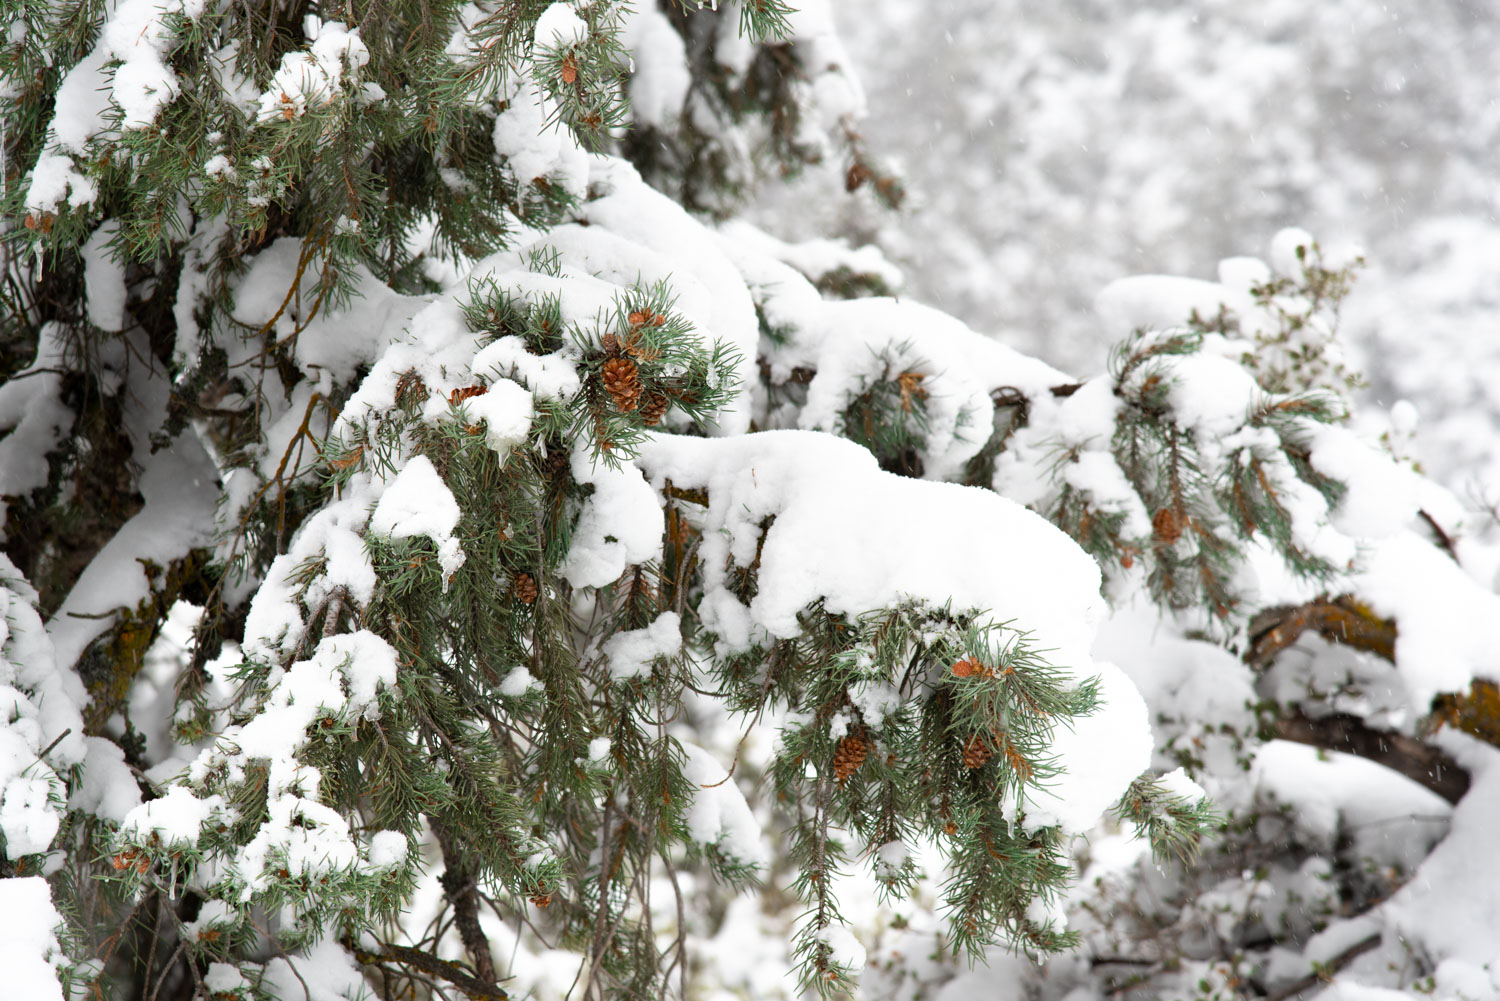 Singleleaf Pinyon Pine (Pinus monophylla) in the Snow